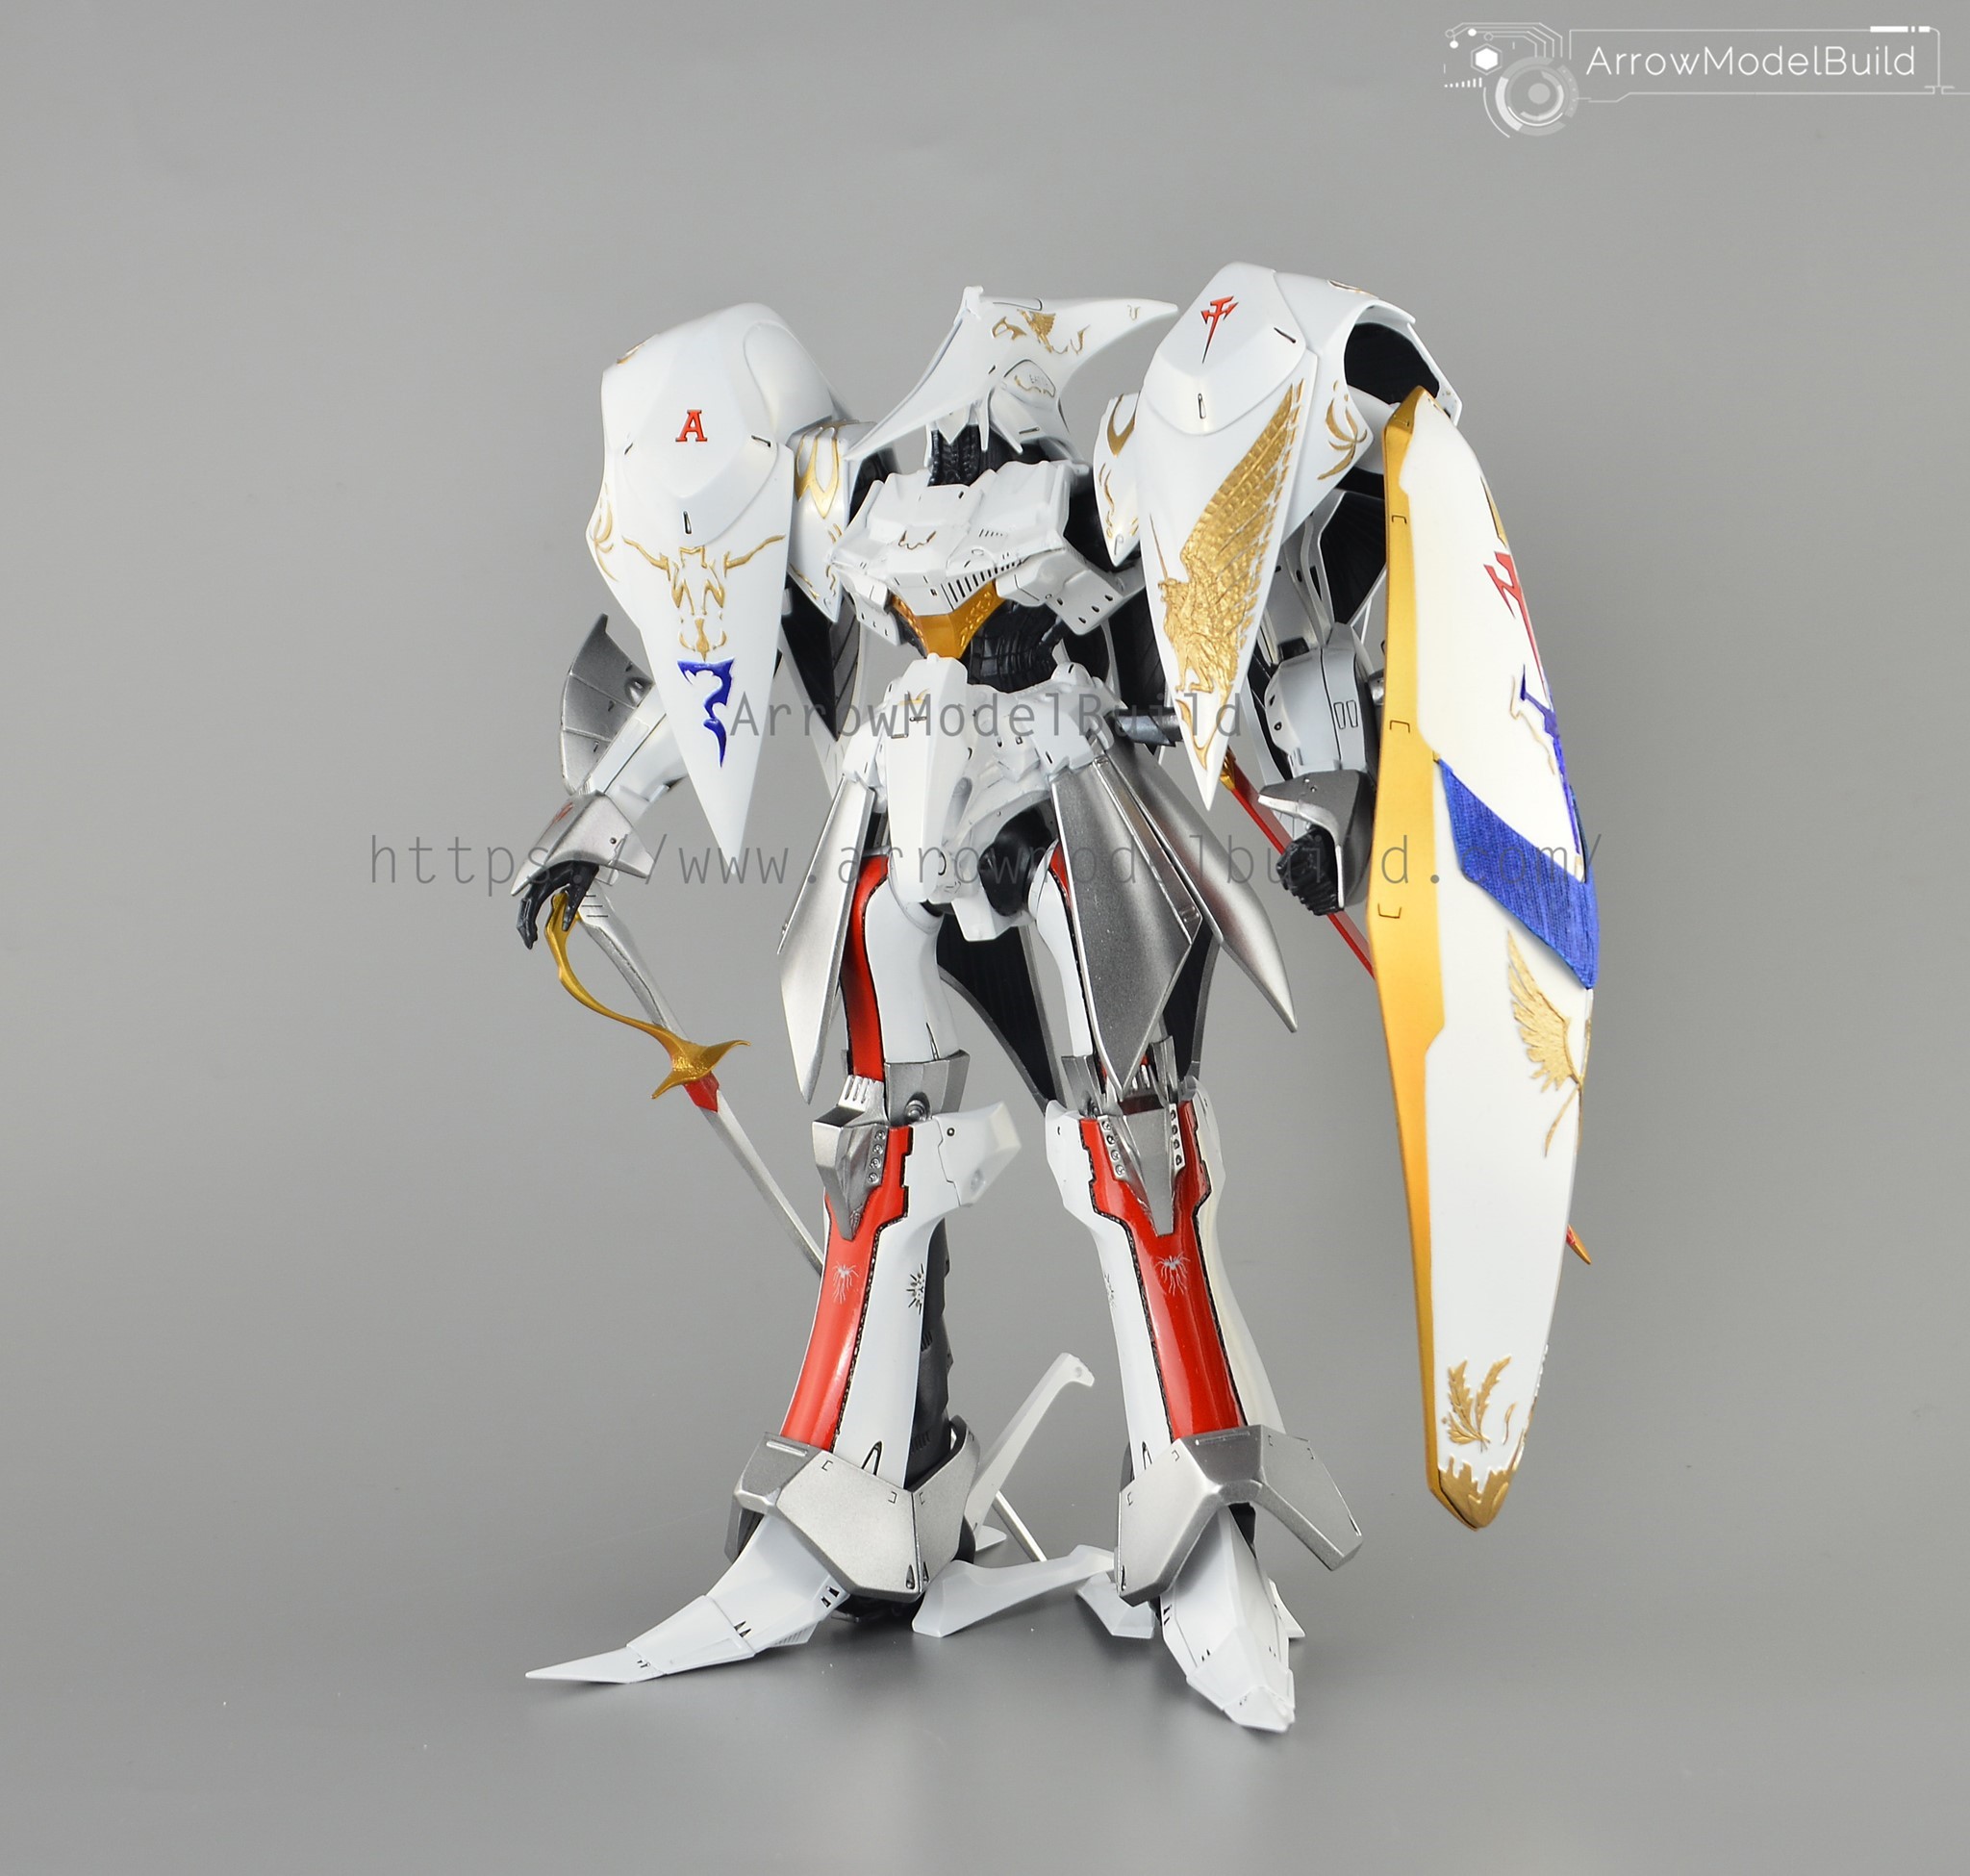 ArrowModelBuild - Figure and Robot, Gundam, Military, Vehicle 